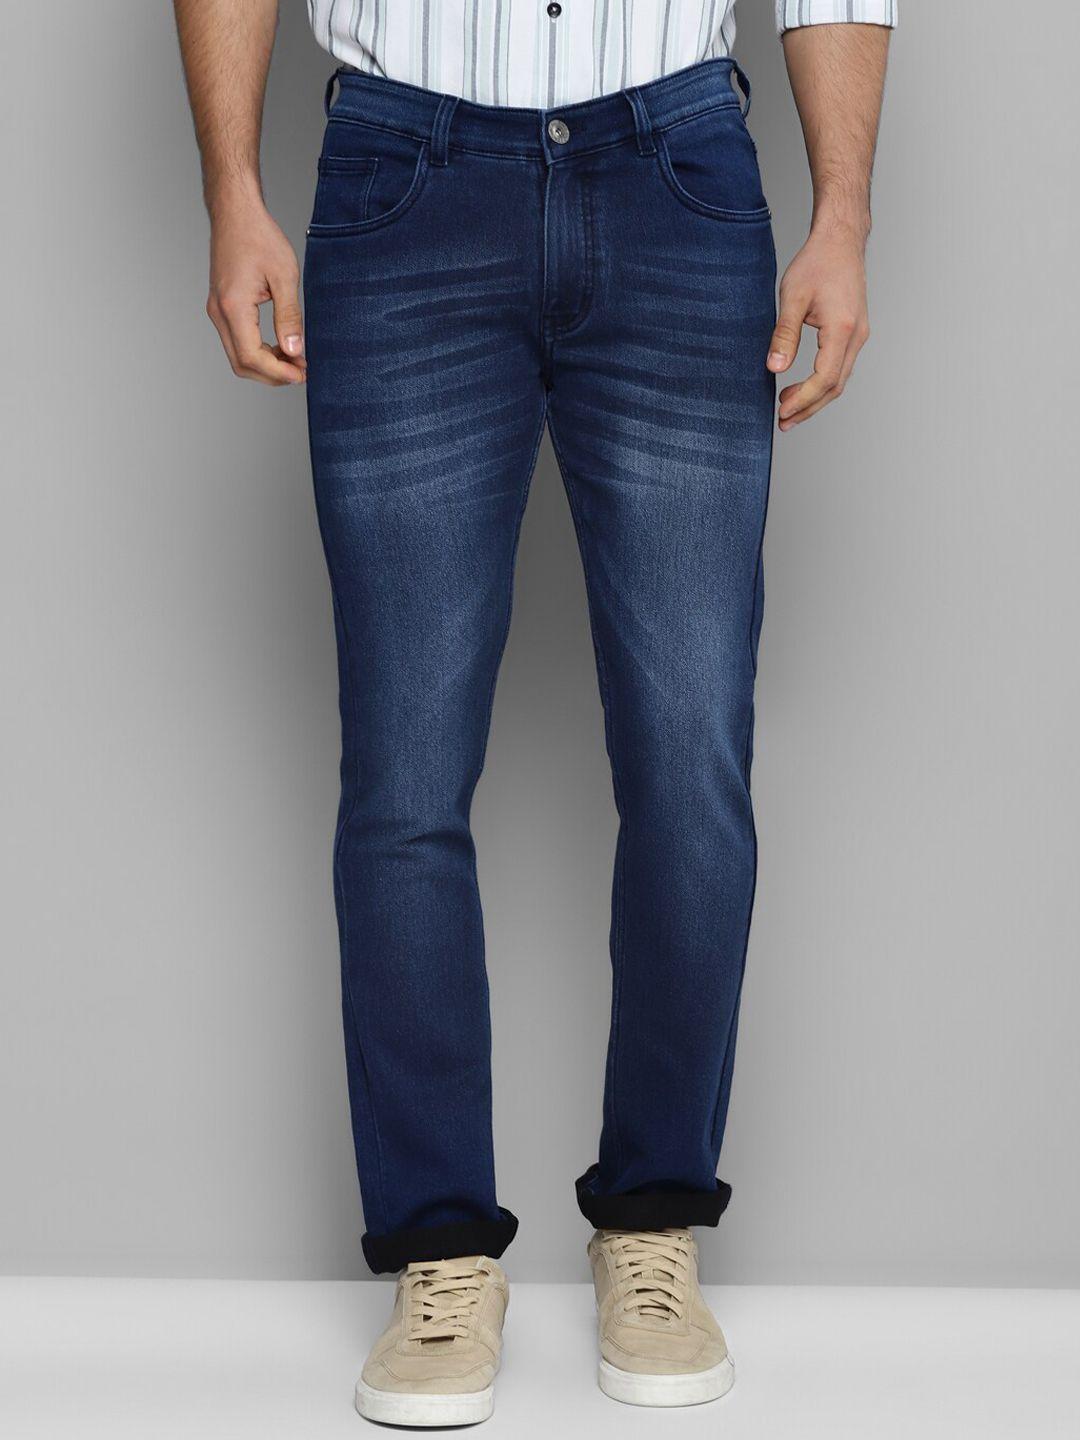 allen-cooper-men-urban-slim-fit-light-fade-stretchable-cotton-jeans